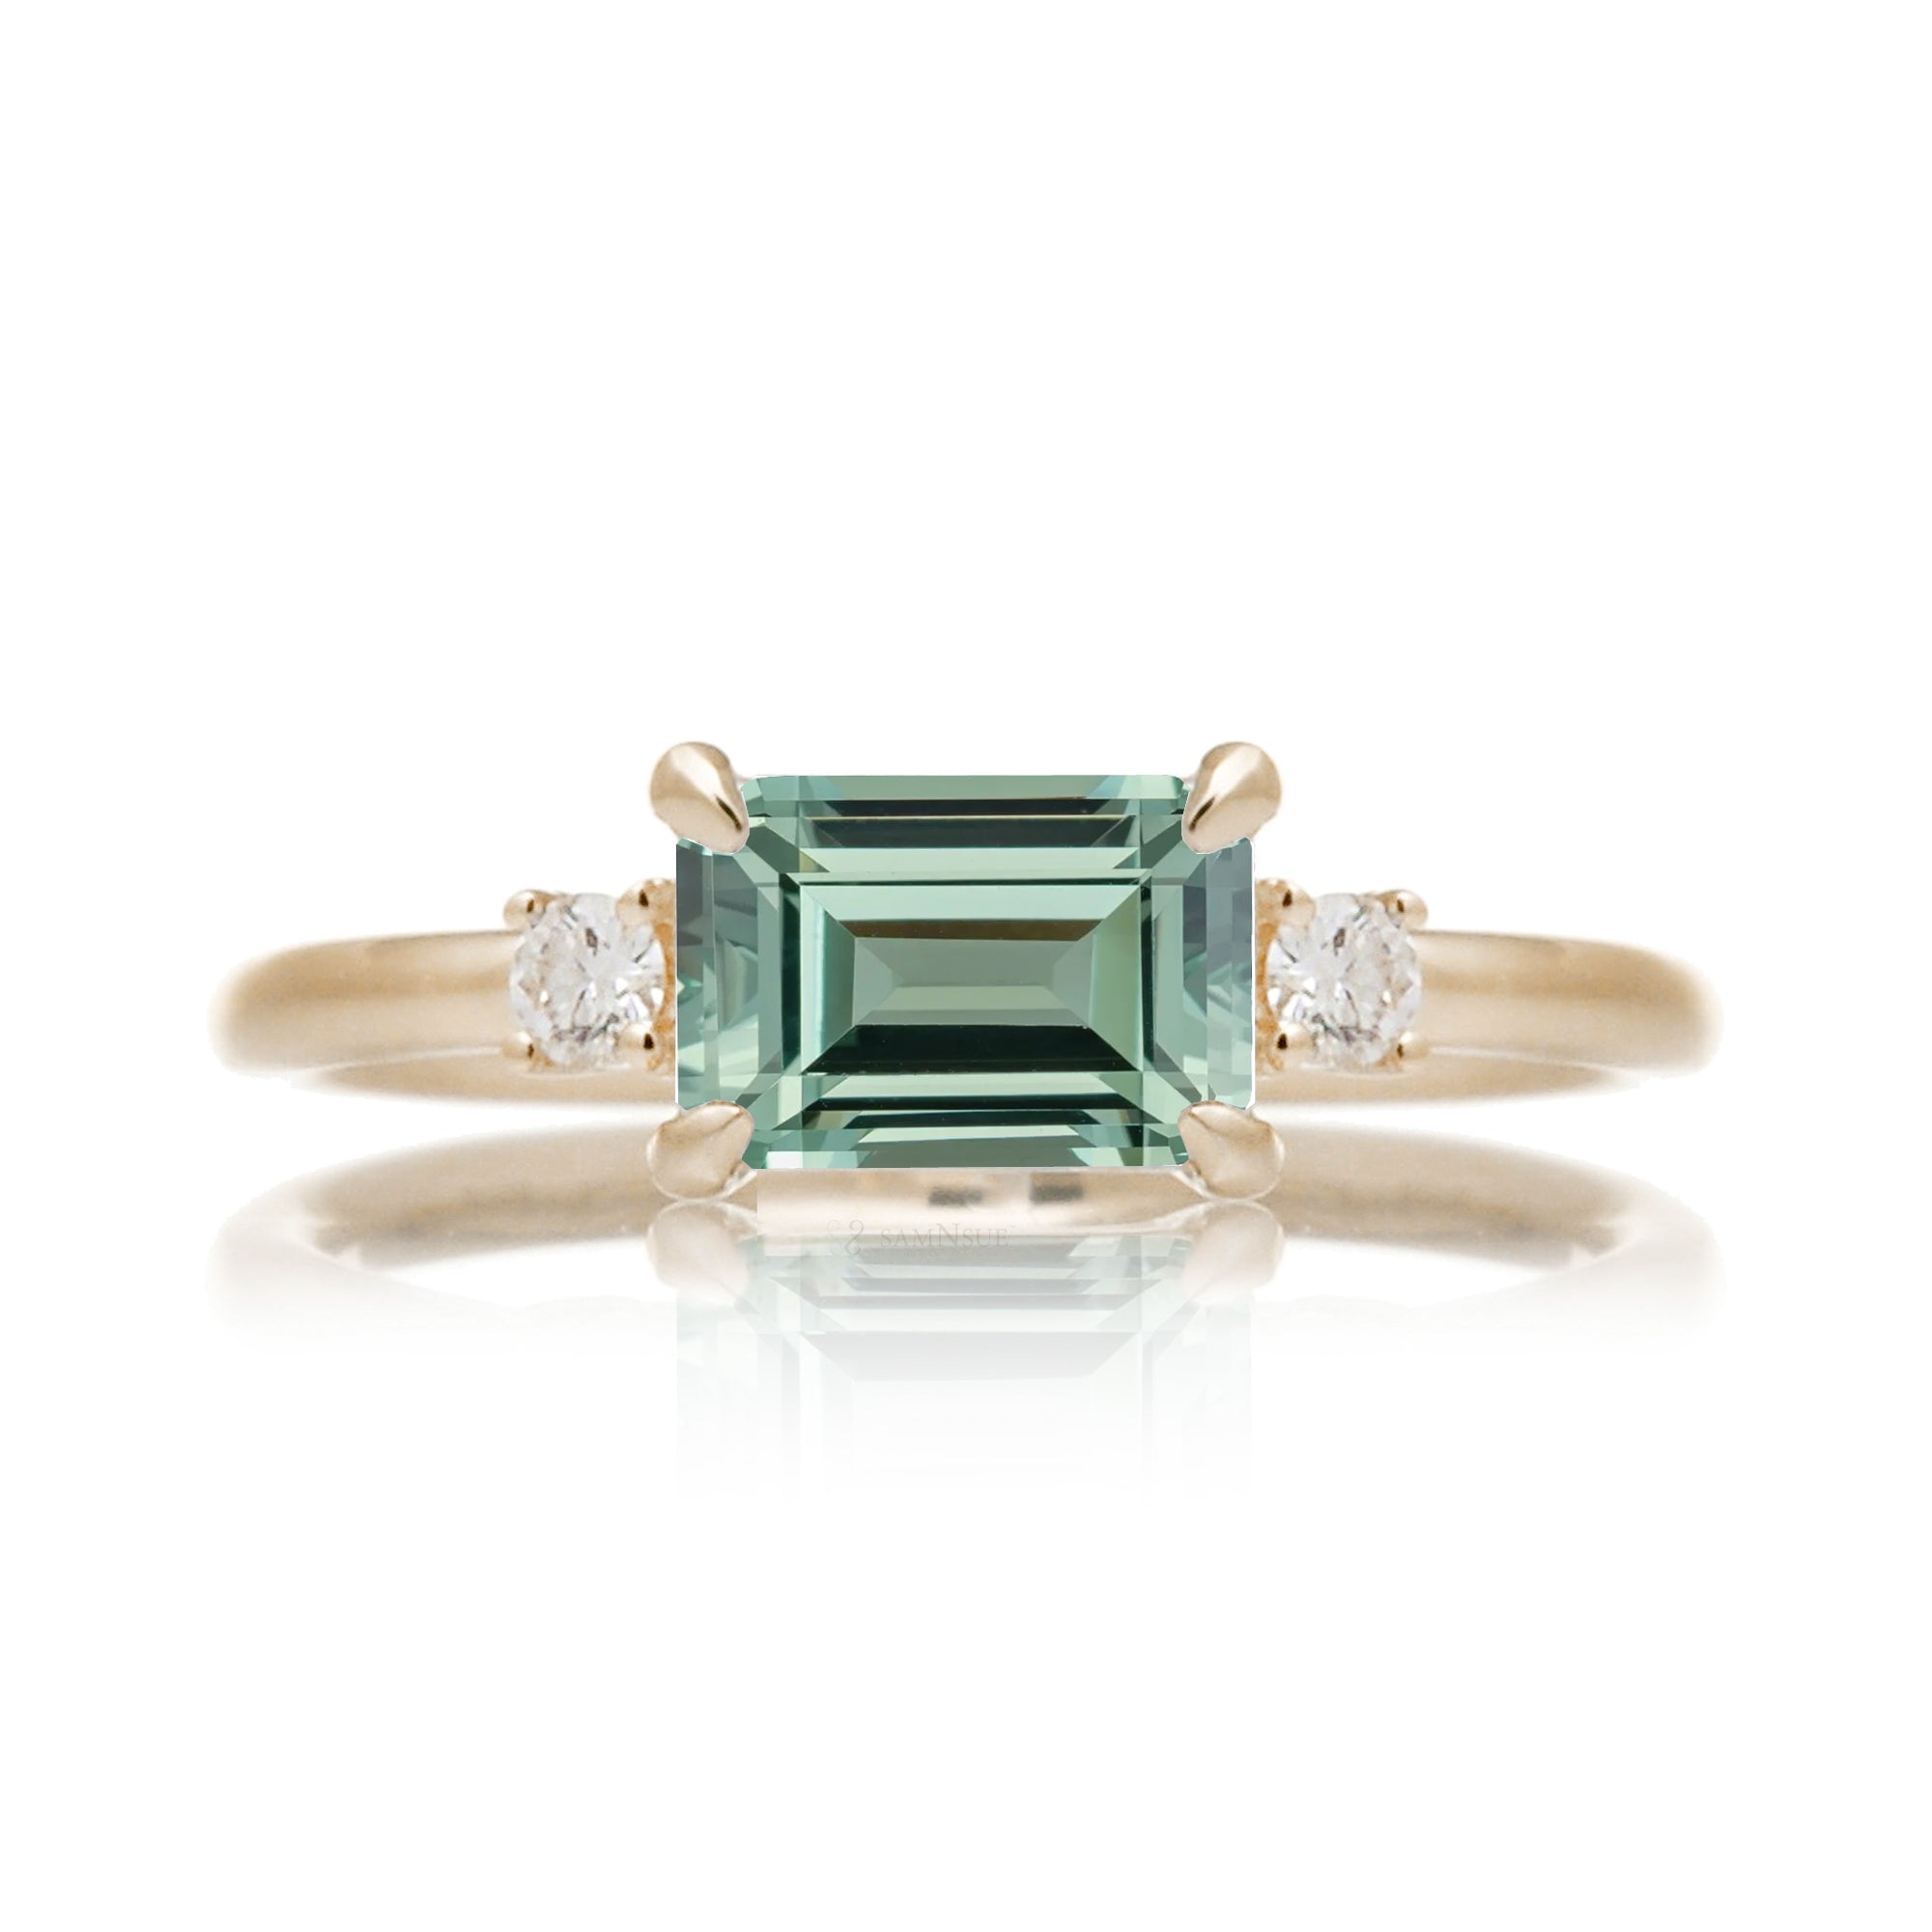 Emerald cut green sapphire three stone ring the Lena yellow gold